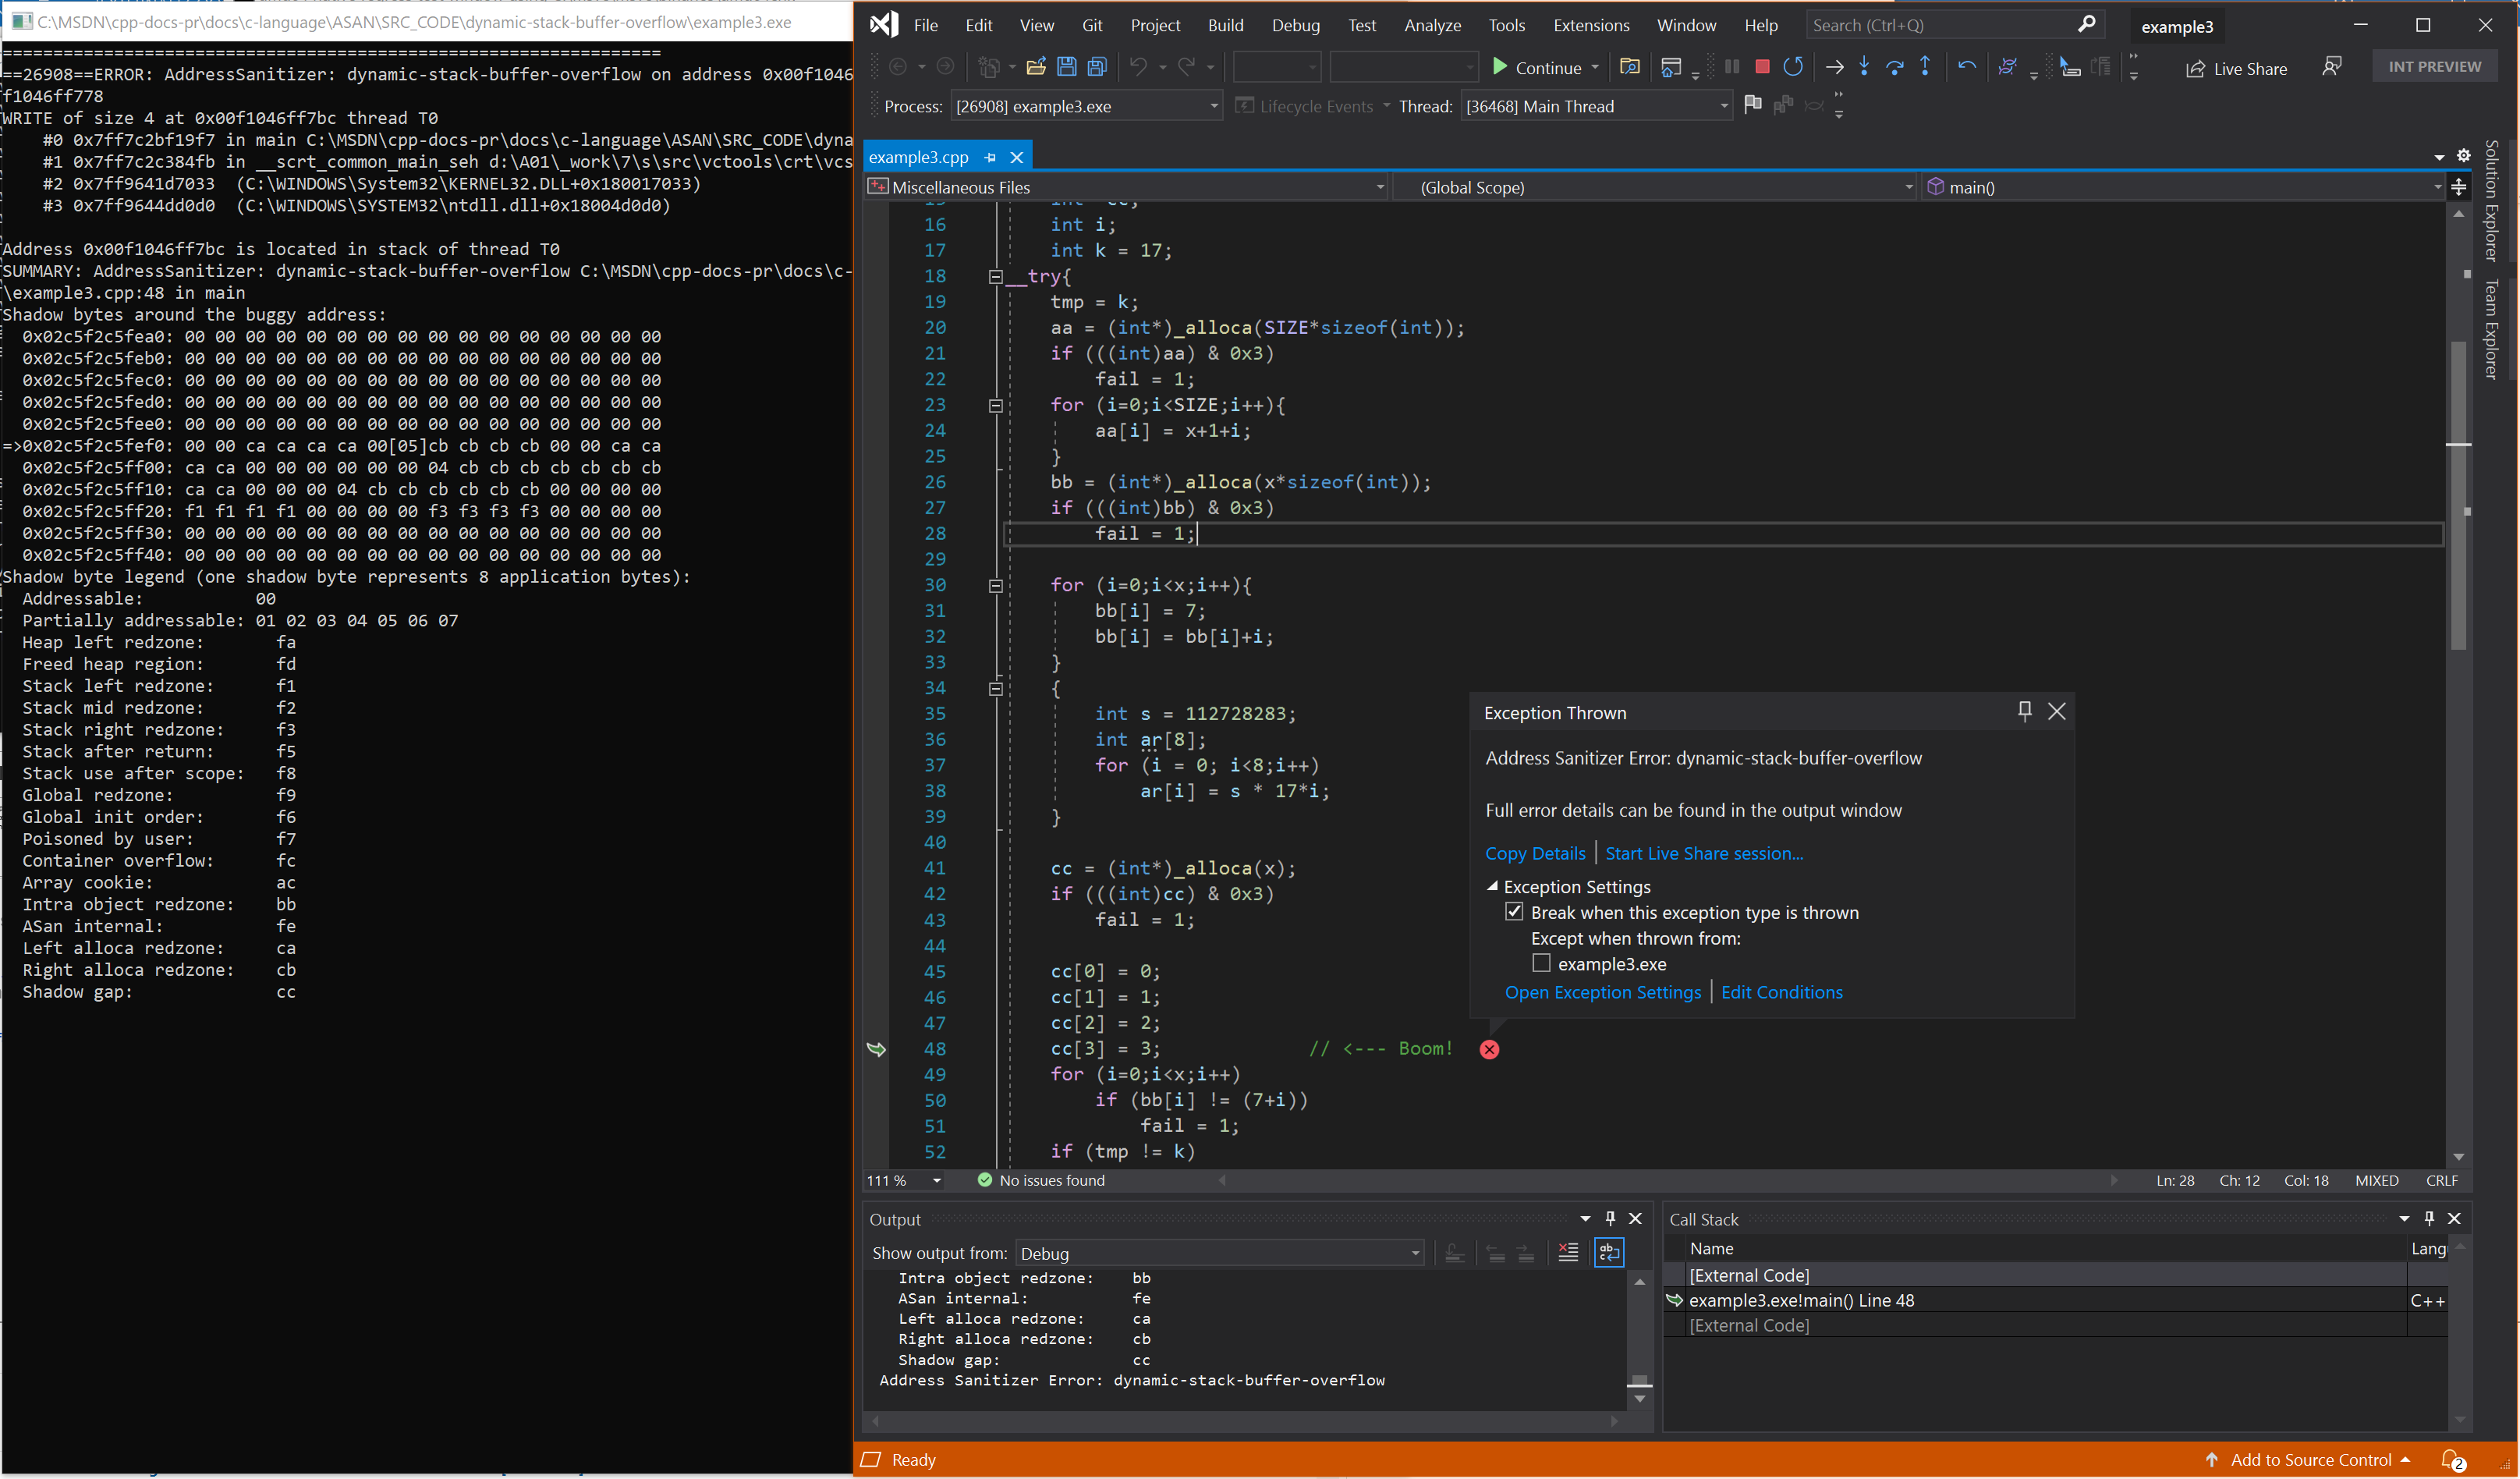 Screenshot of debugger displaying dynamic-stack-buffer-overflow error in example 3.